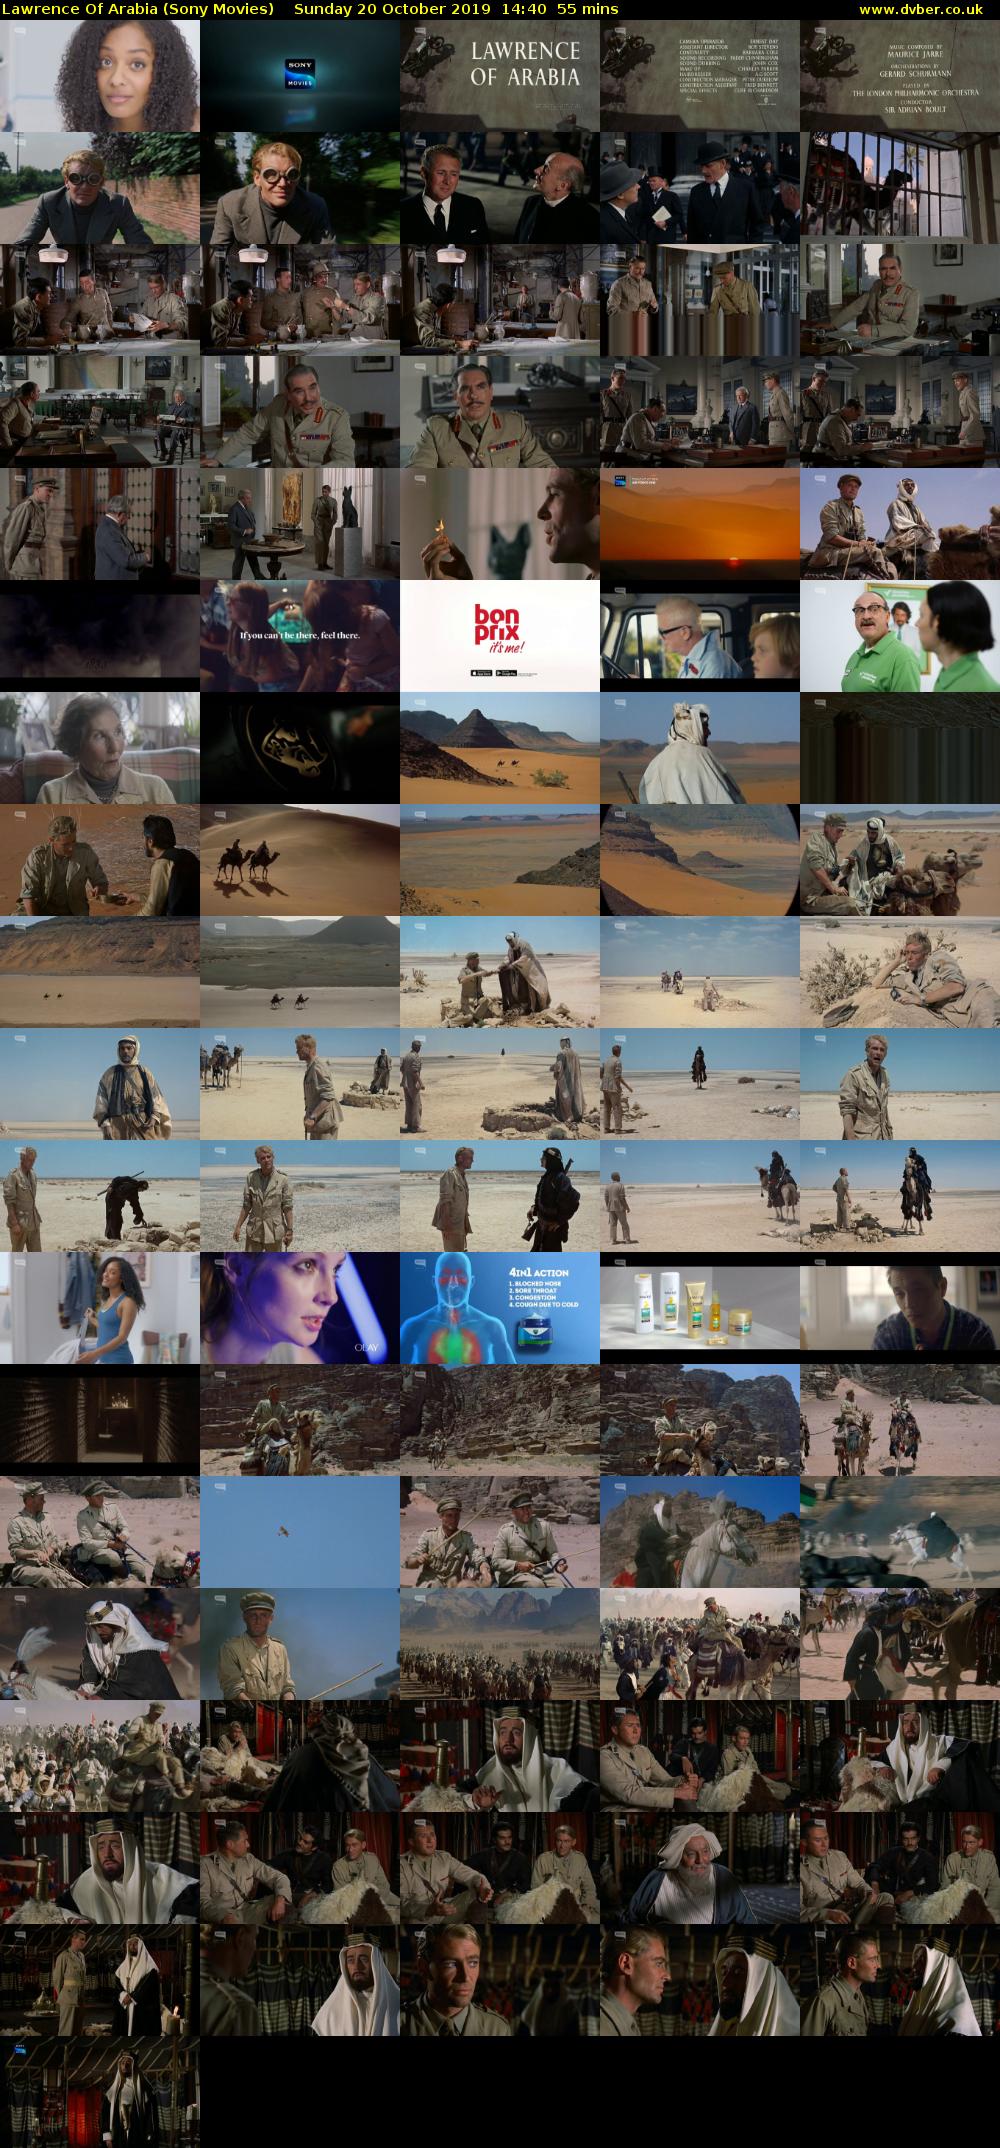 Lawrence Of Arabia (Sony Movies) Sunday 20 October 2019 14:40 - 15:35